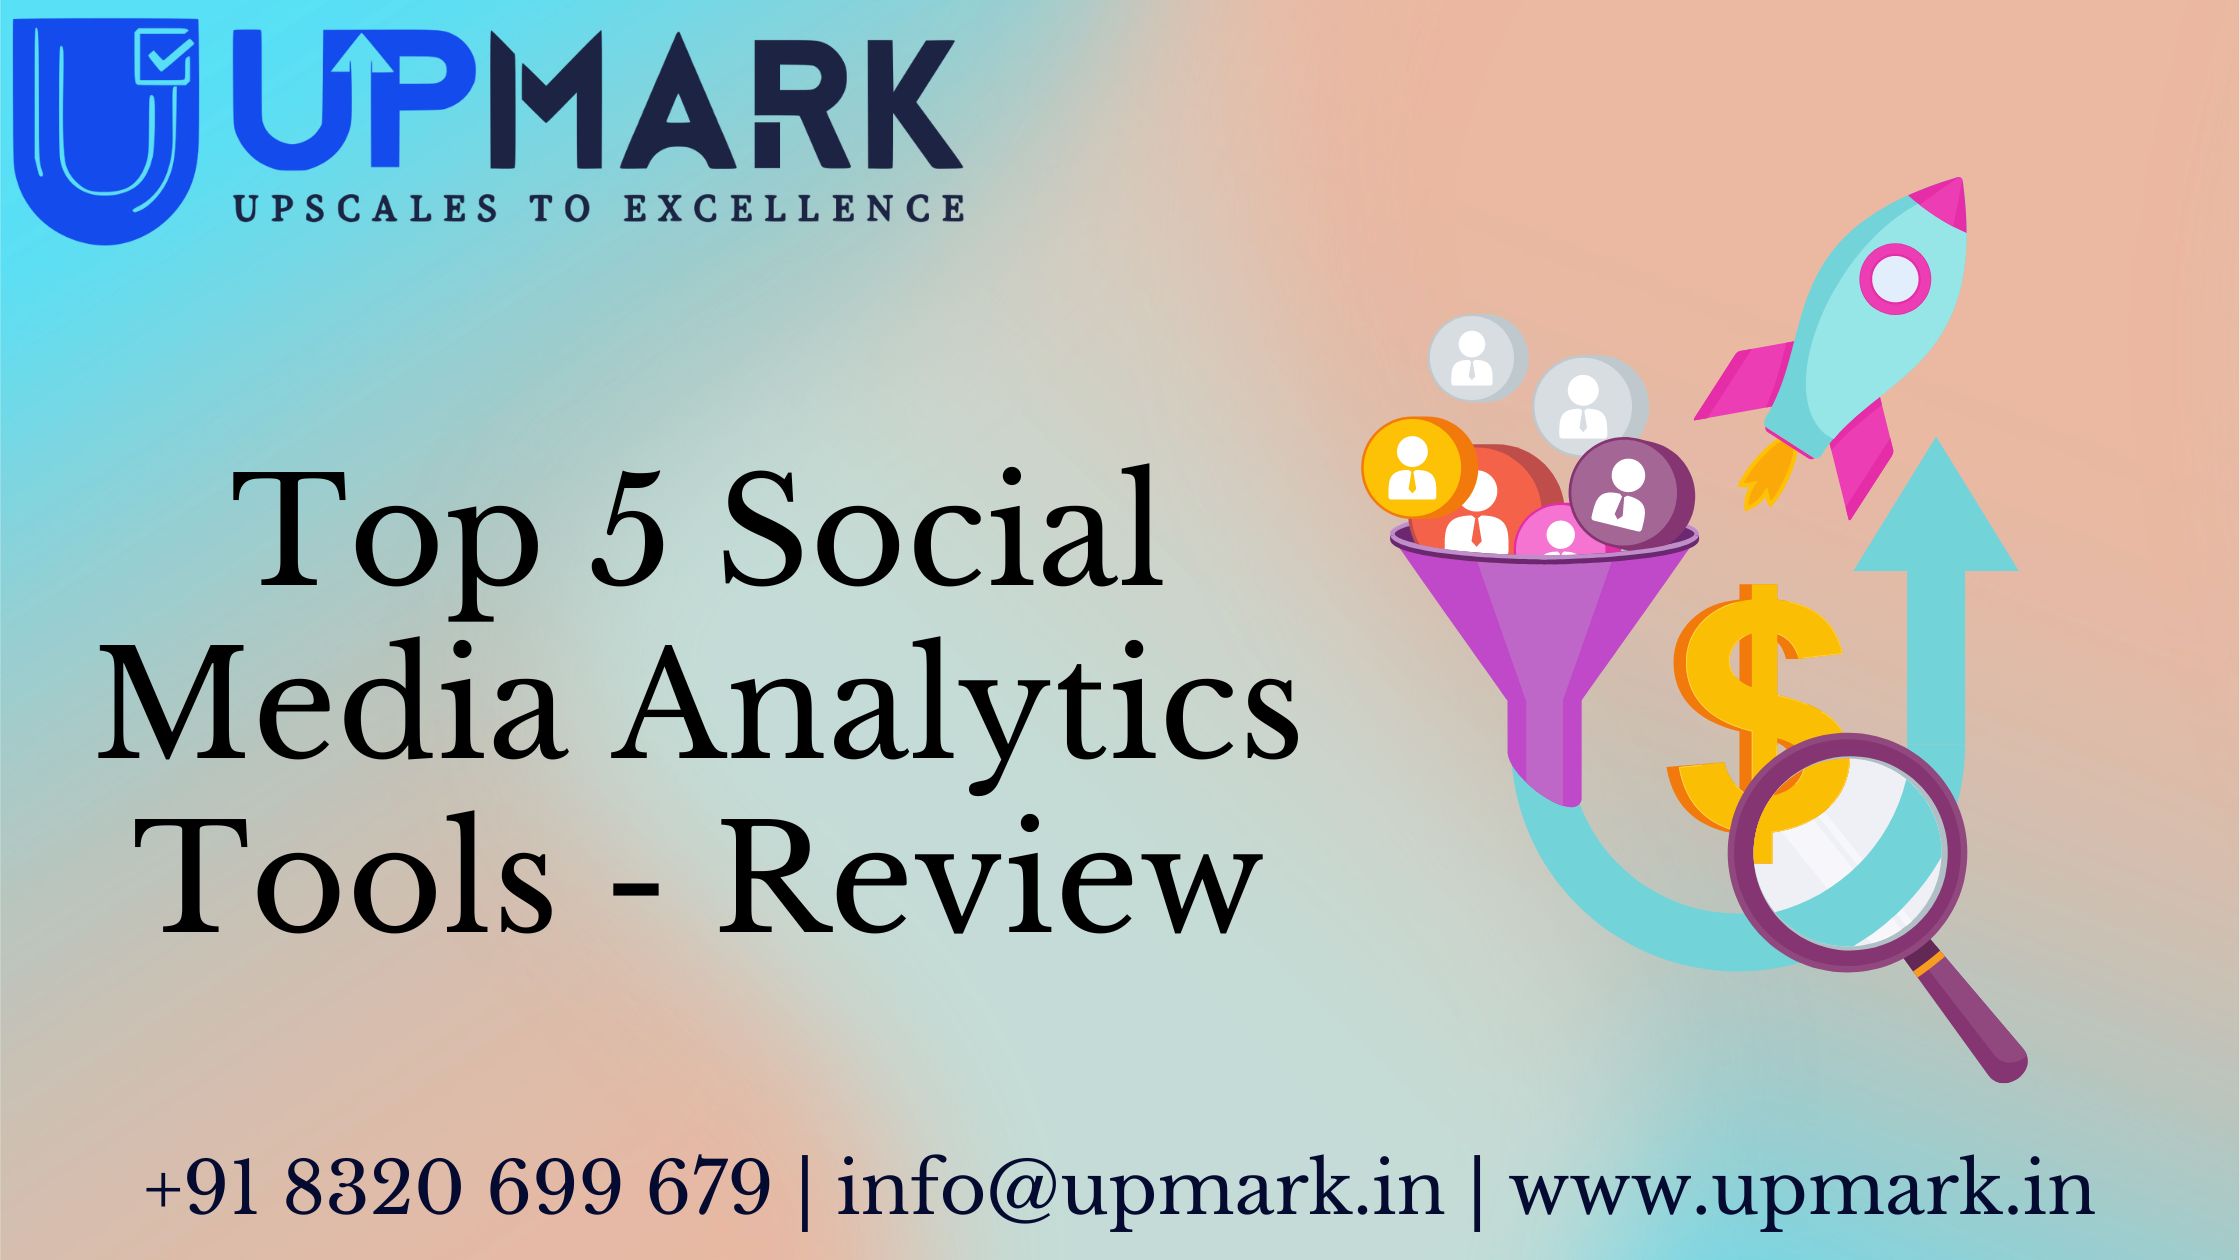 Top 5 Social Media Analytics Tools - Review